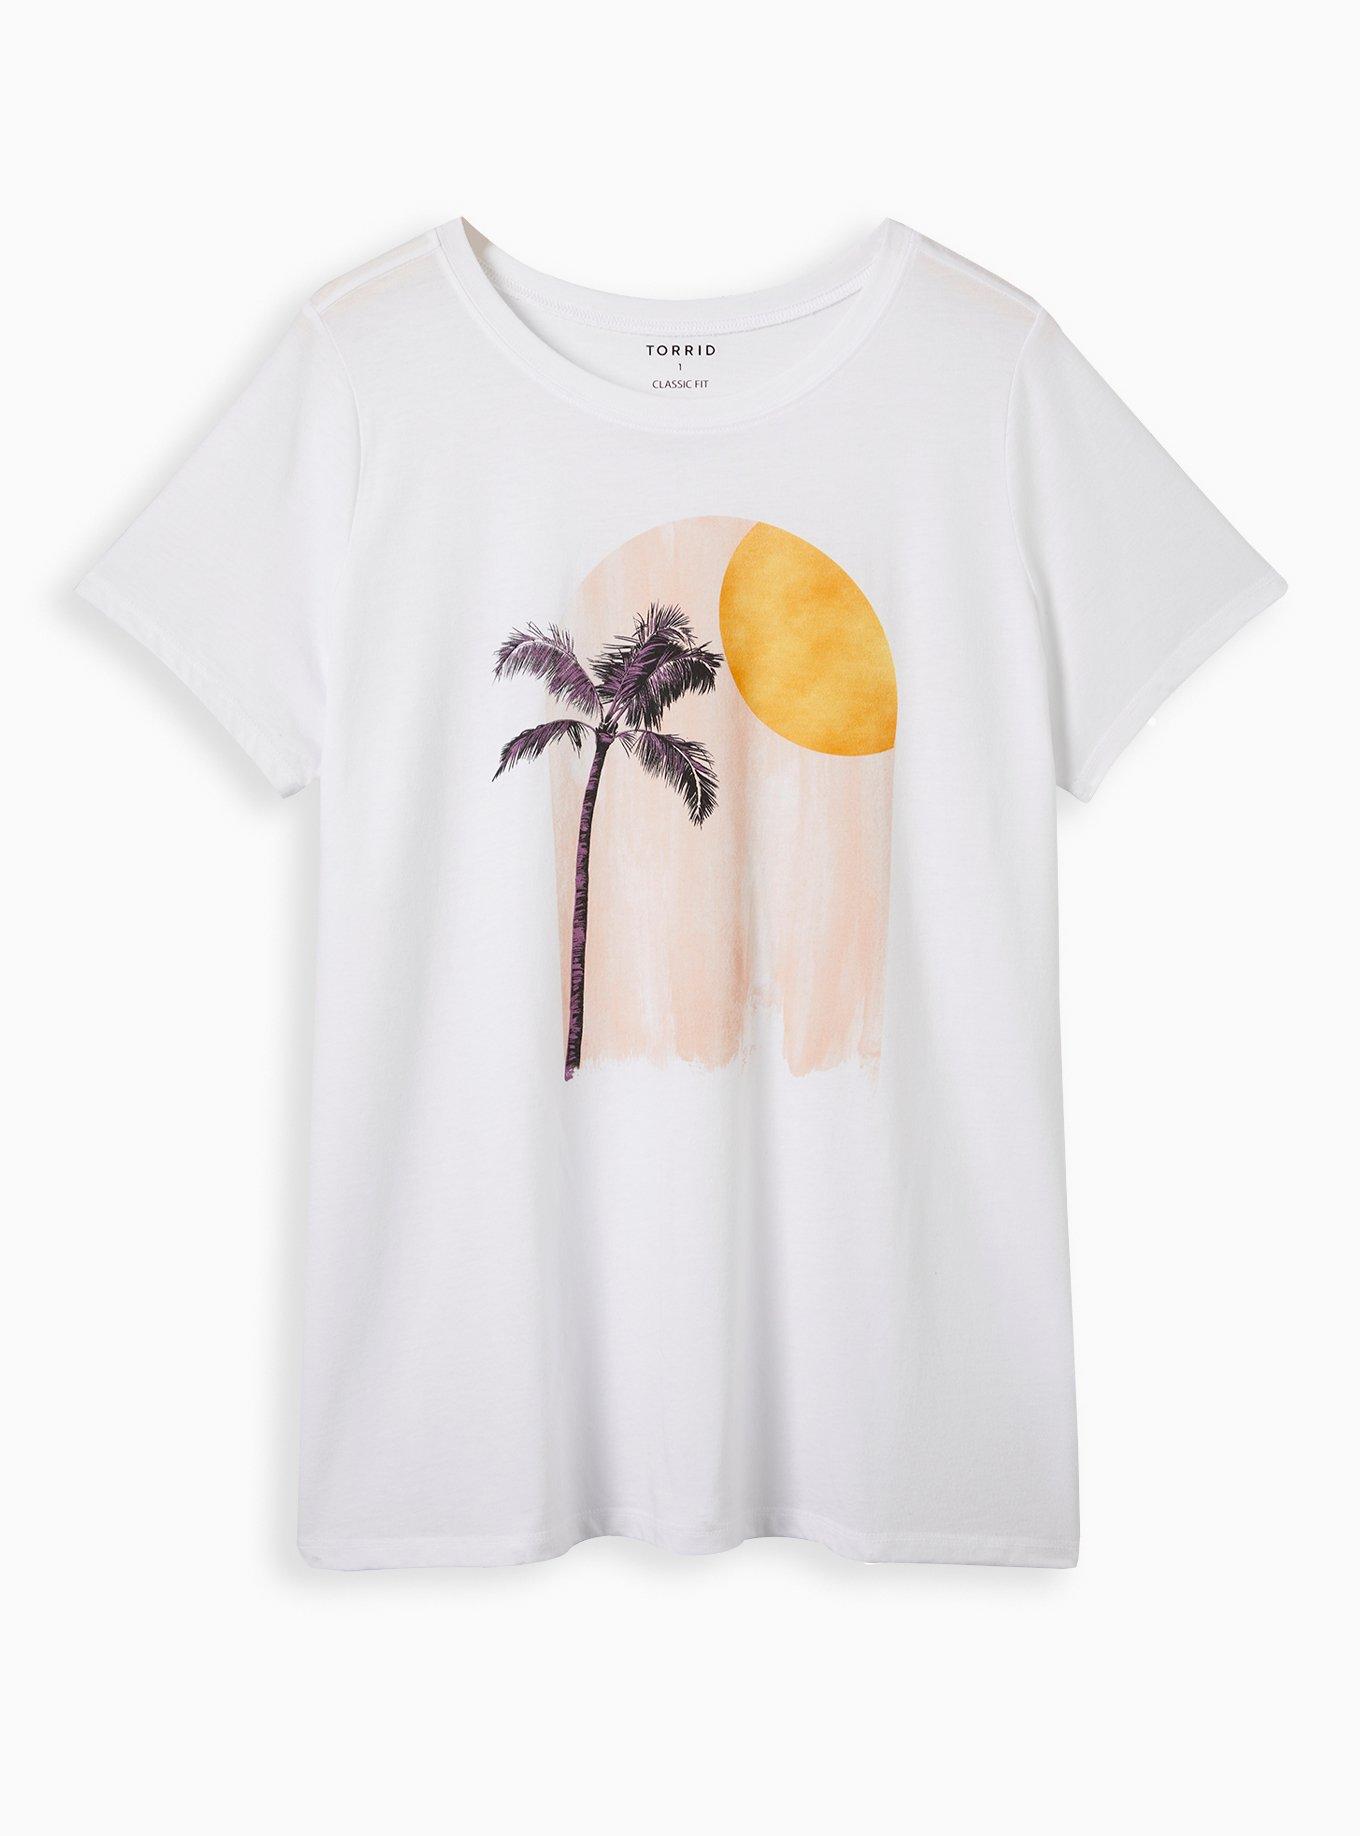 Plus Size - Everyday Tee - Signature Jersey Palm Tree White - Torrid